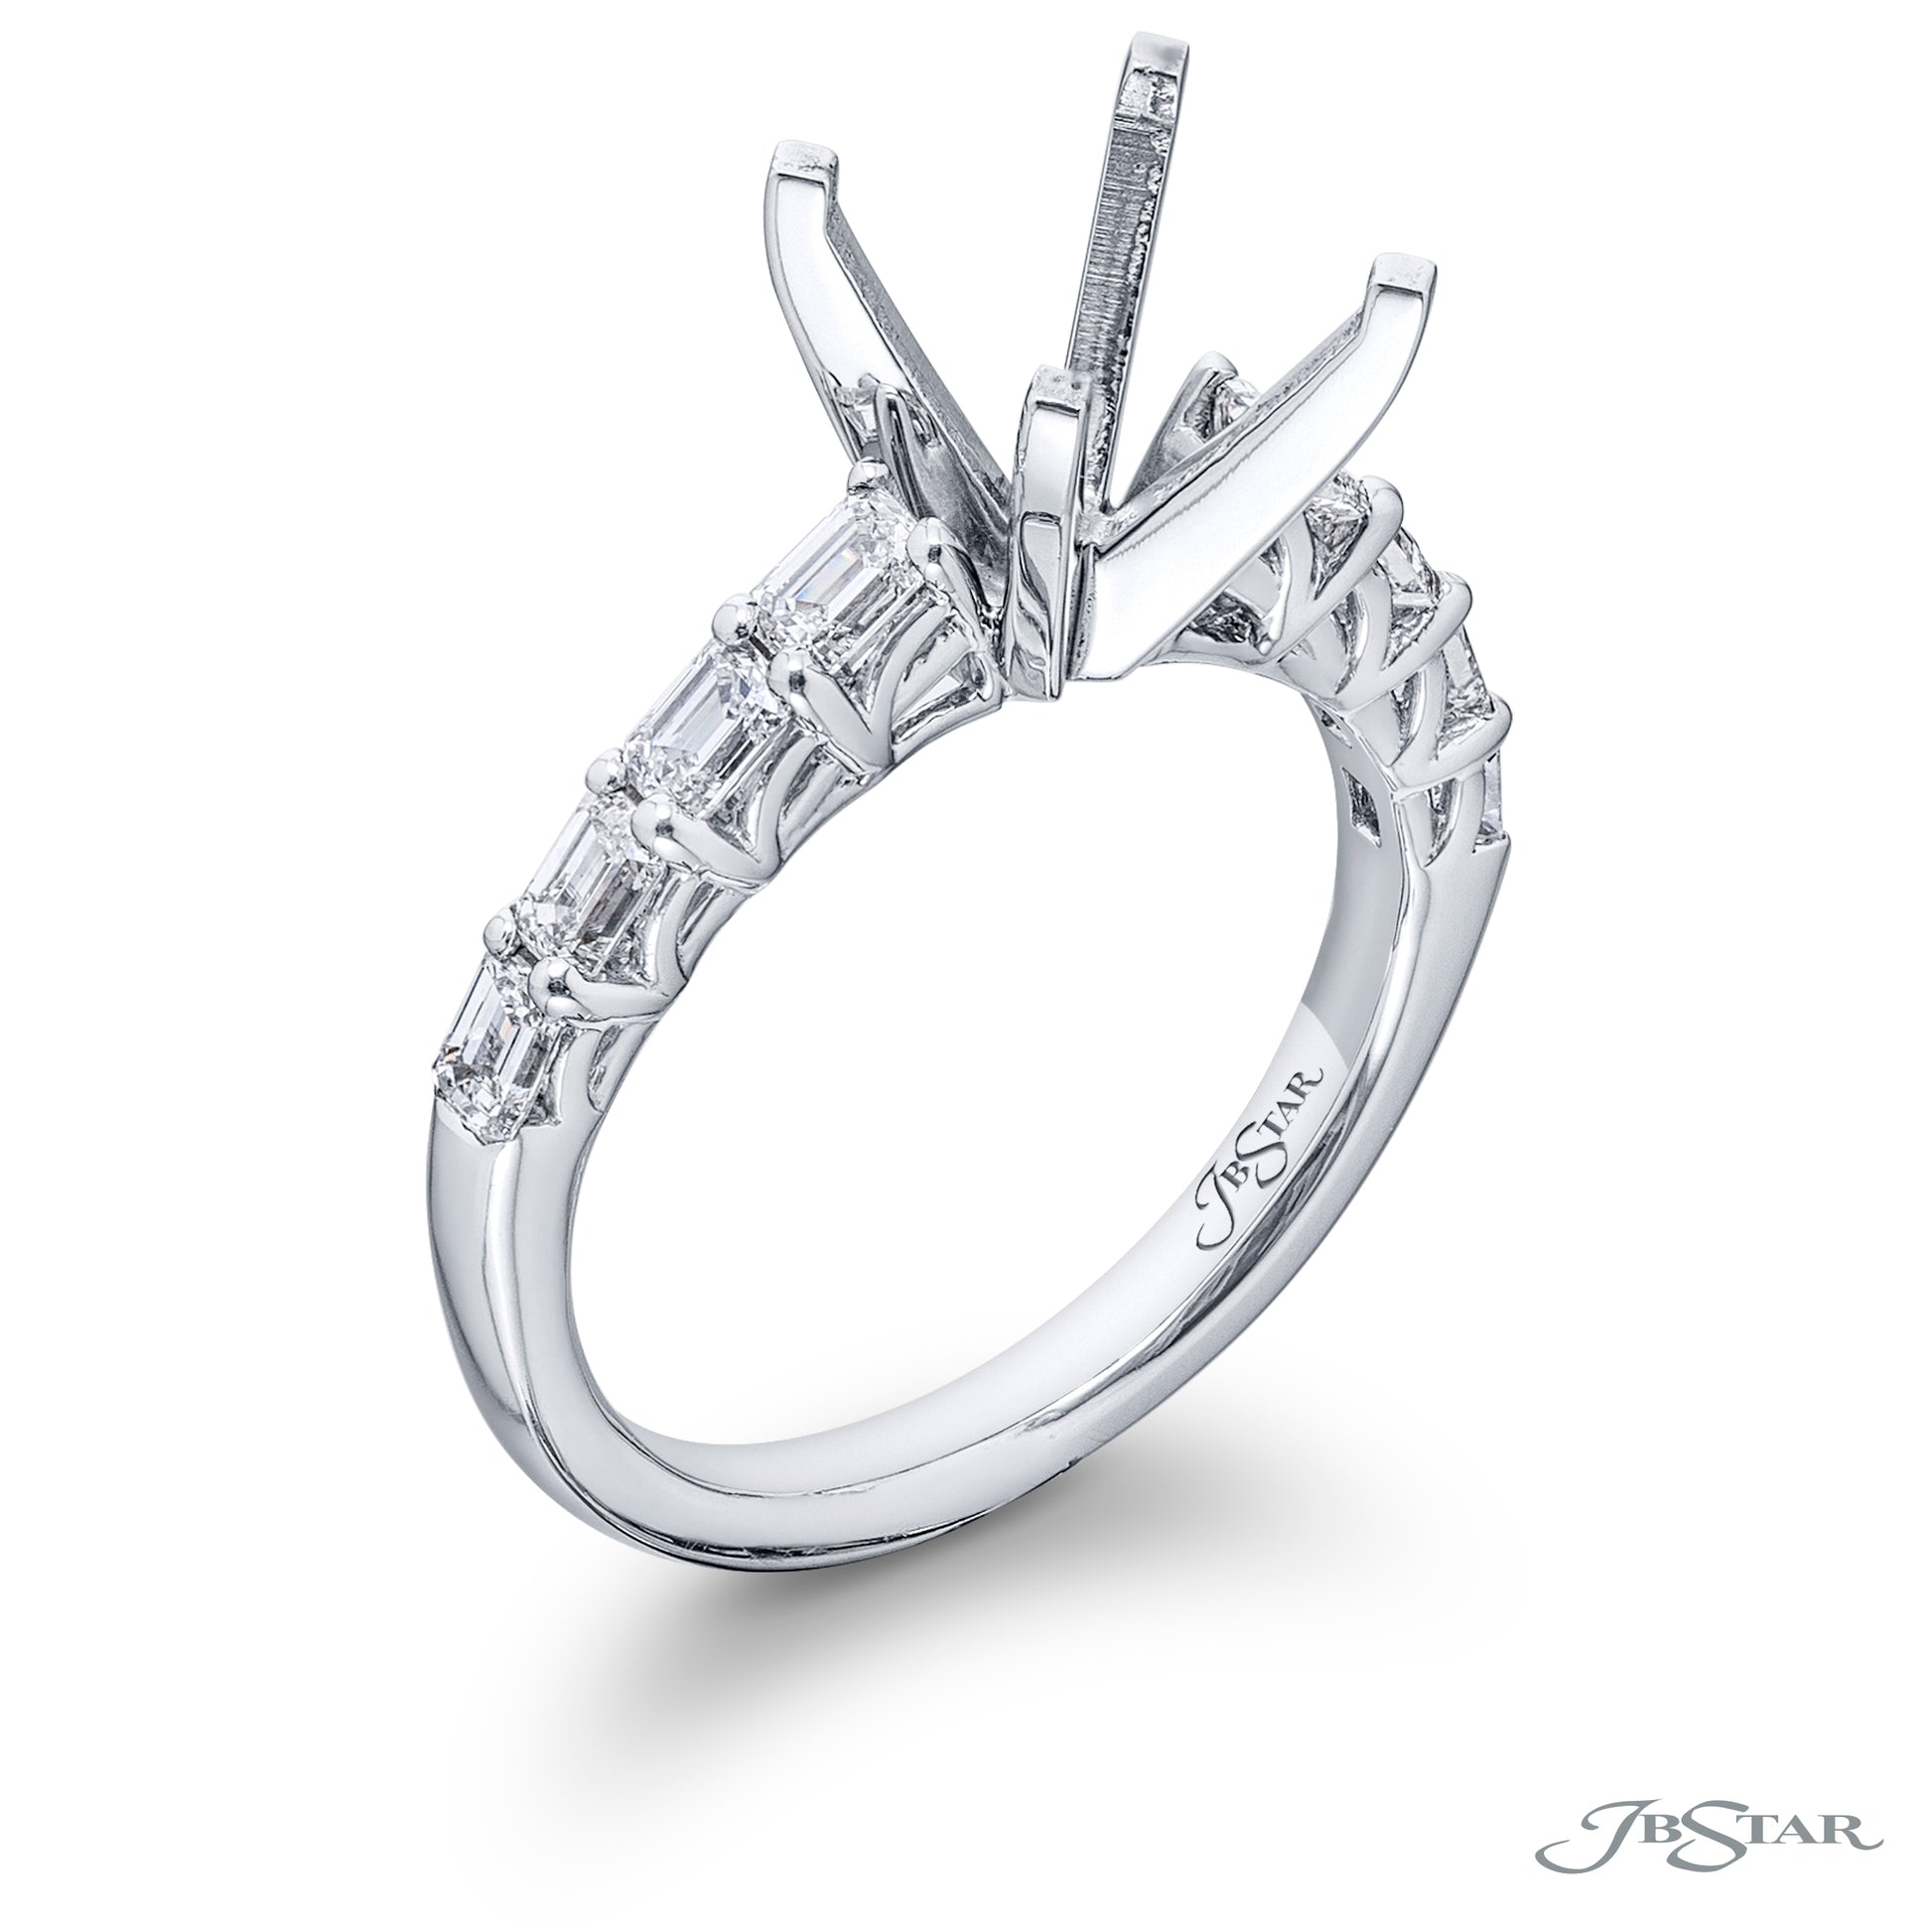 JB Star Platinum Diamond Semi-Mount Engagement Ring - Diamond Semi-Mount Rings